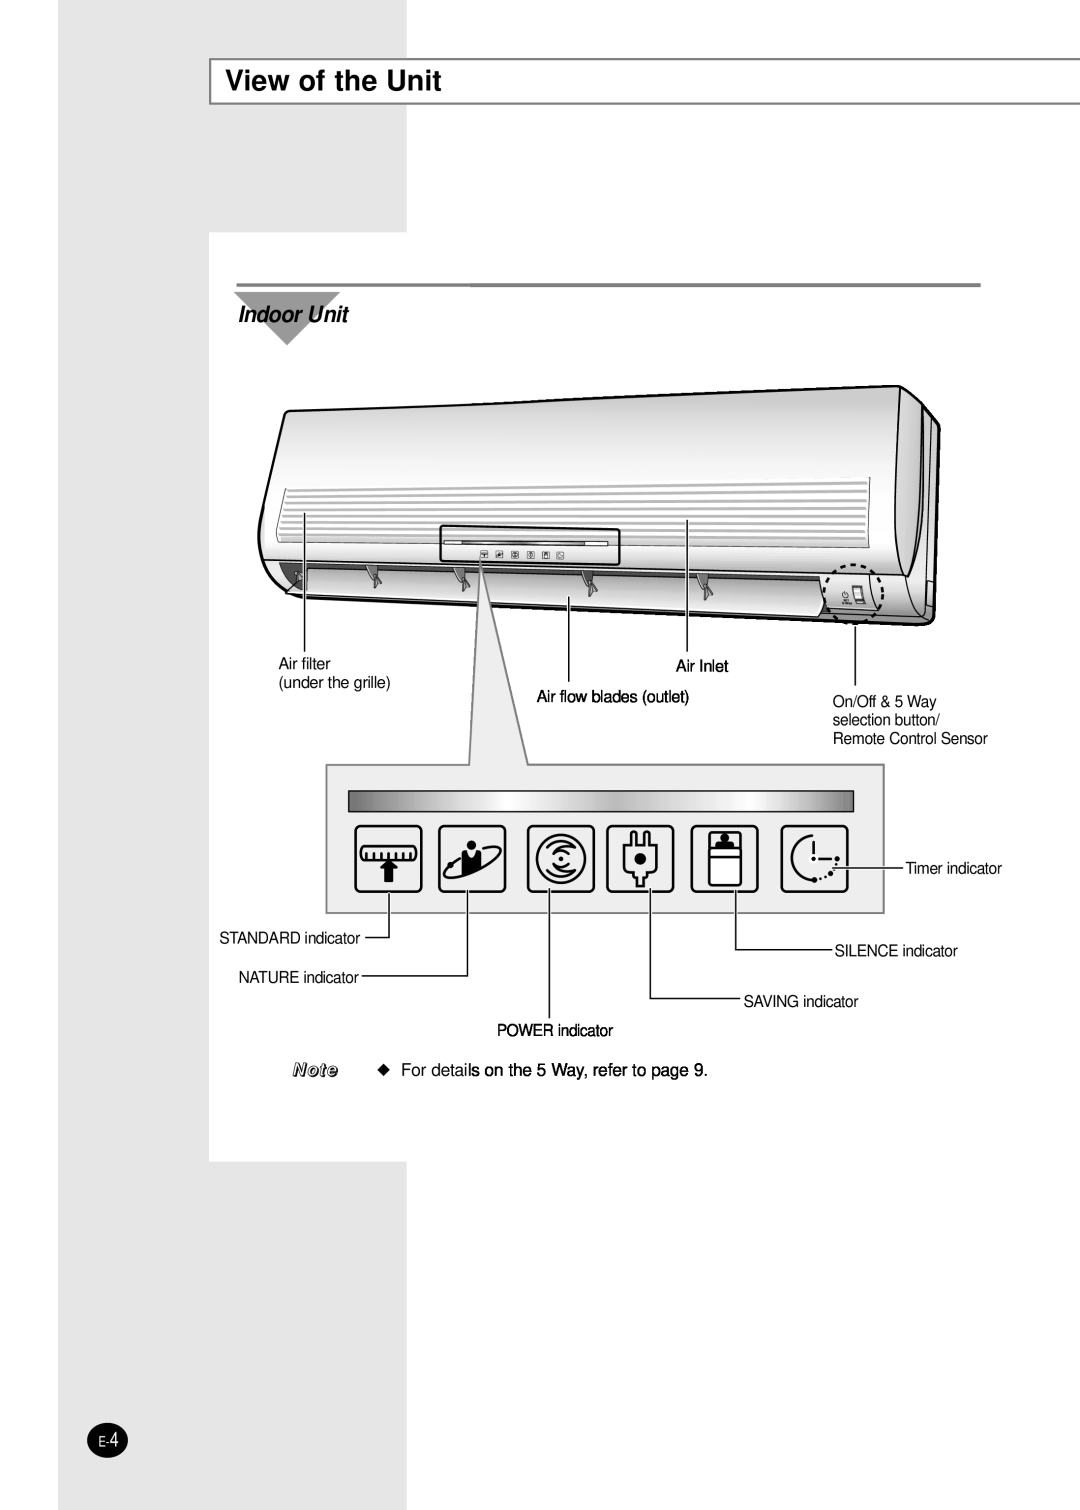 Samsung AQ30C1(2)BC installation manual View of the Unit, Indoor Unit 